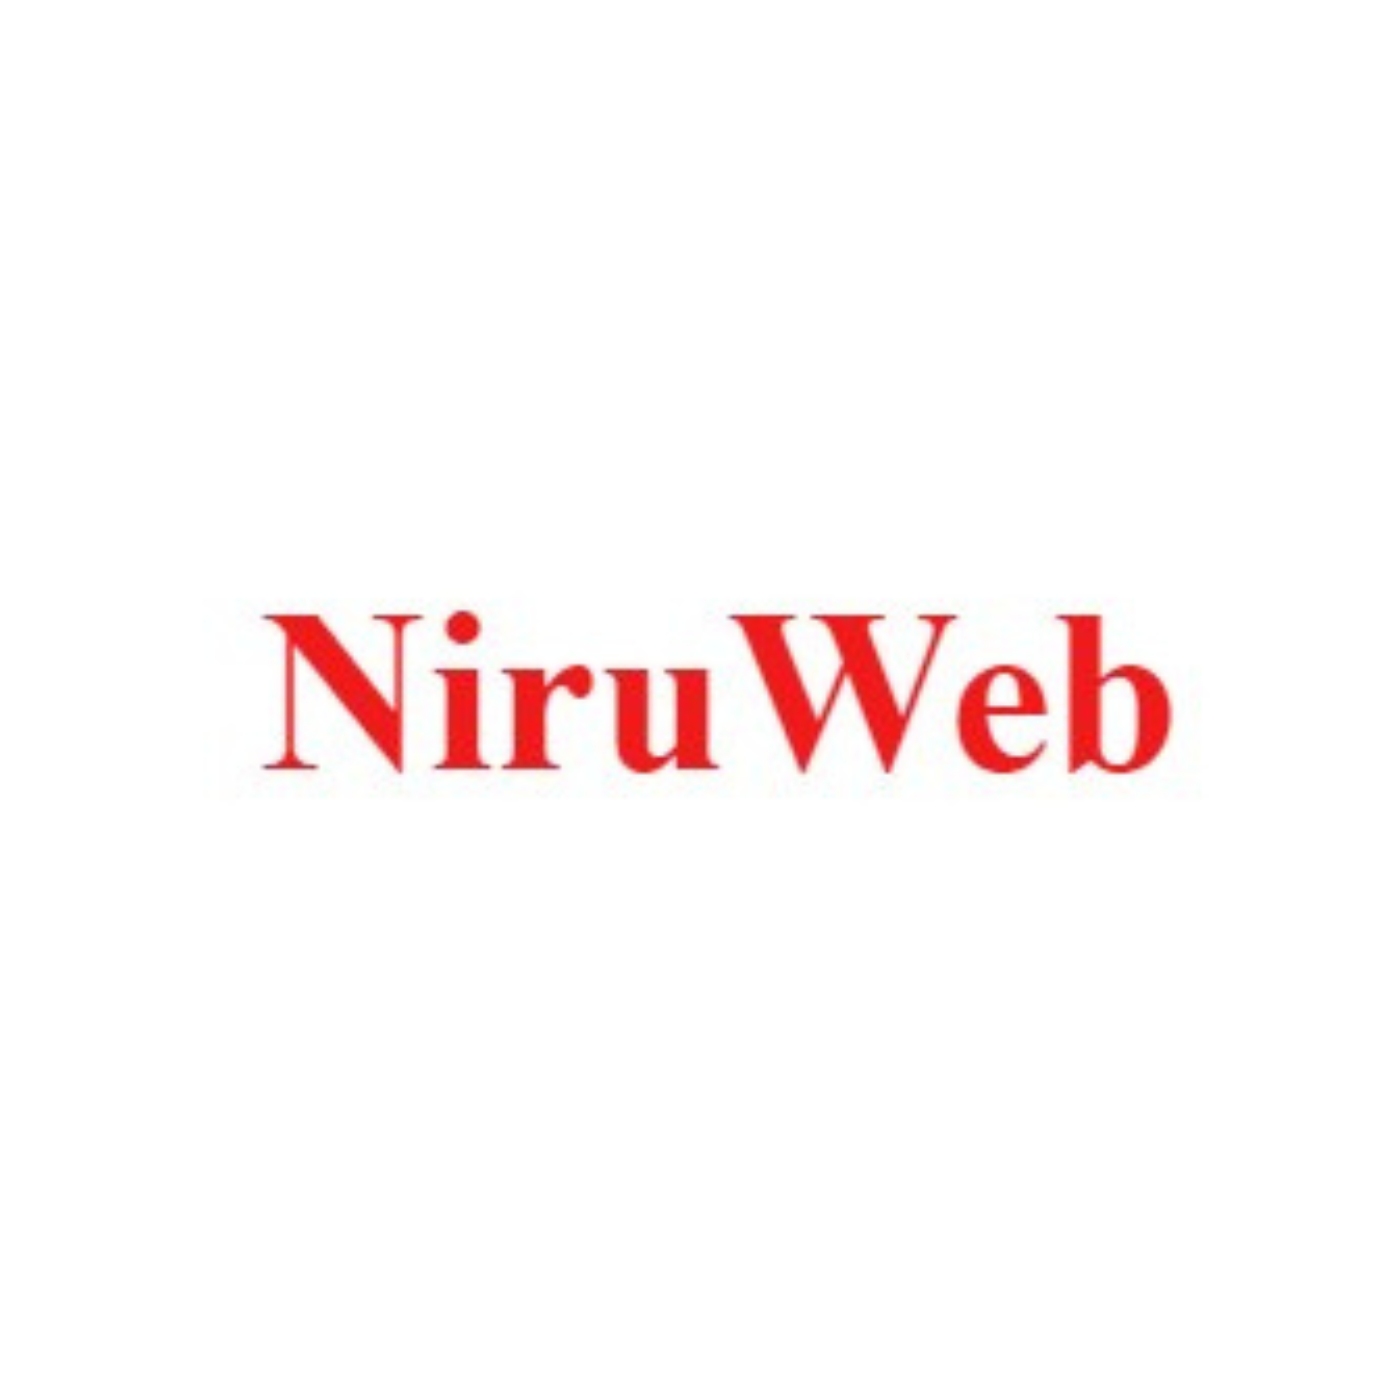 Niru Web Profile Picture